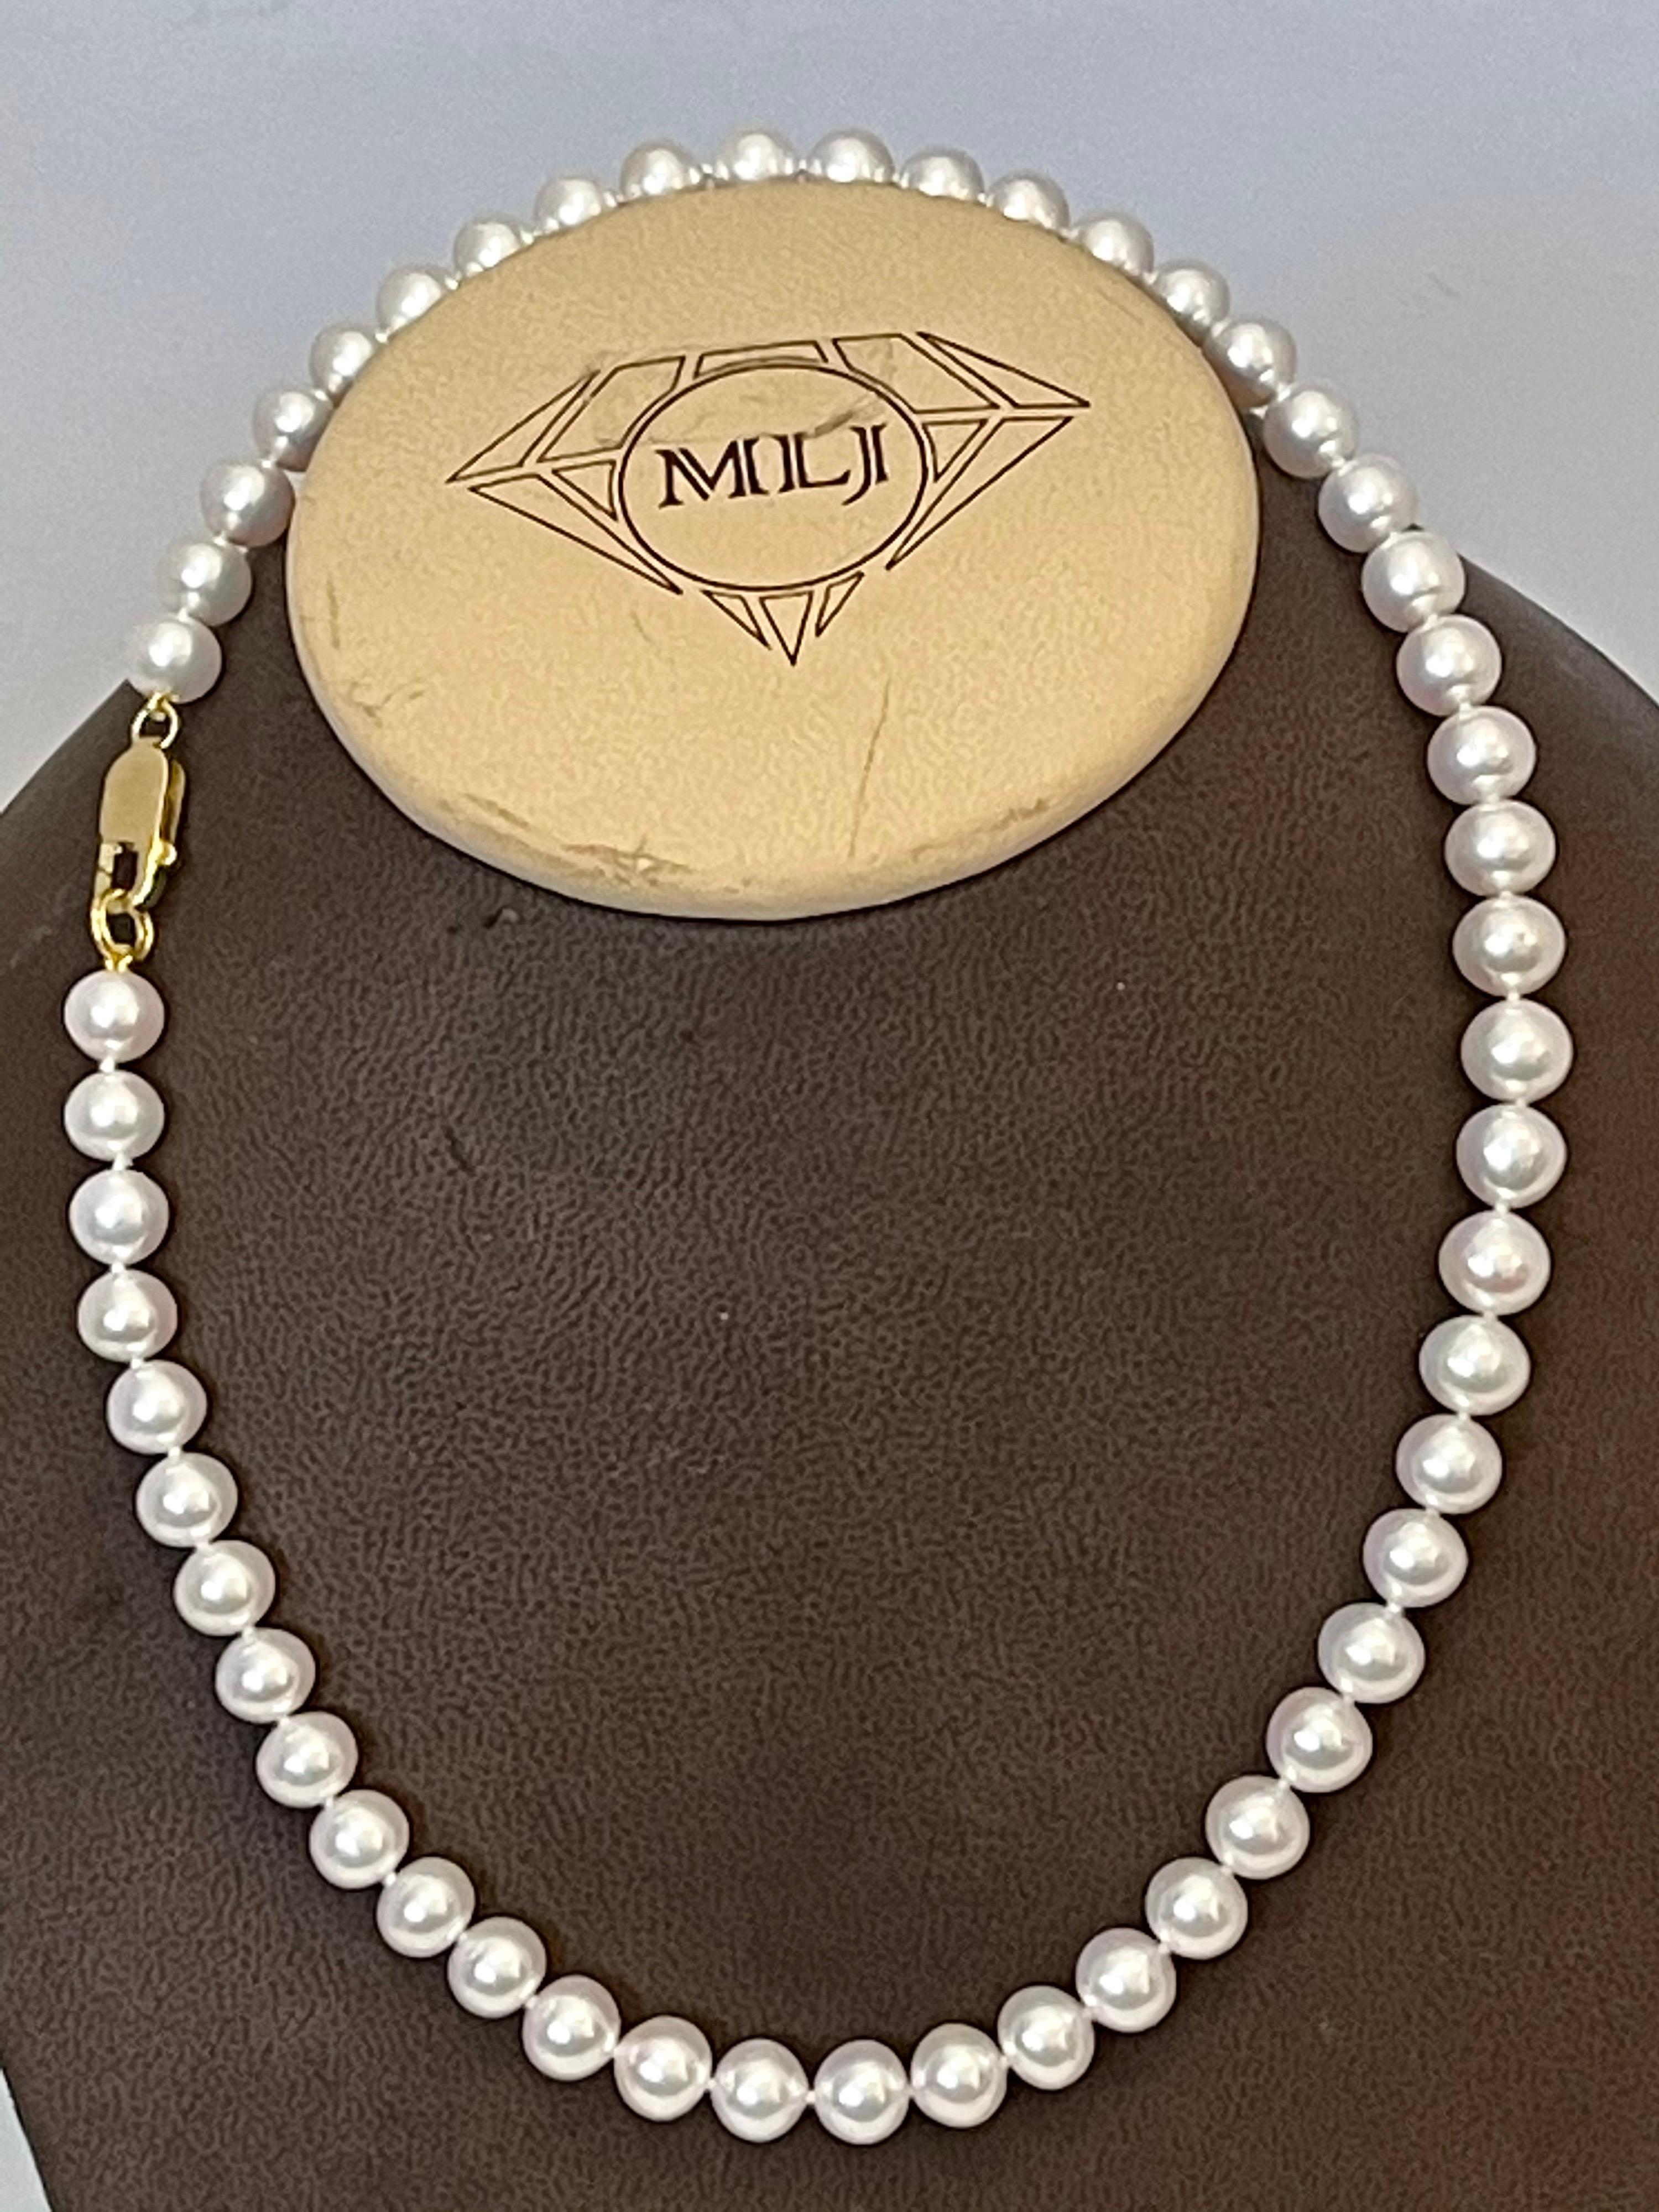 50 Round Akoya Pearls Strand Necklace Set in 14 Karat Gold Clasp 7